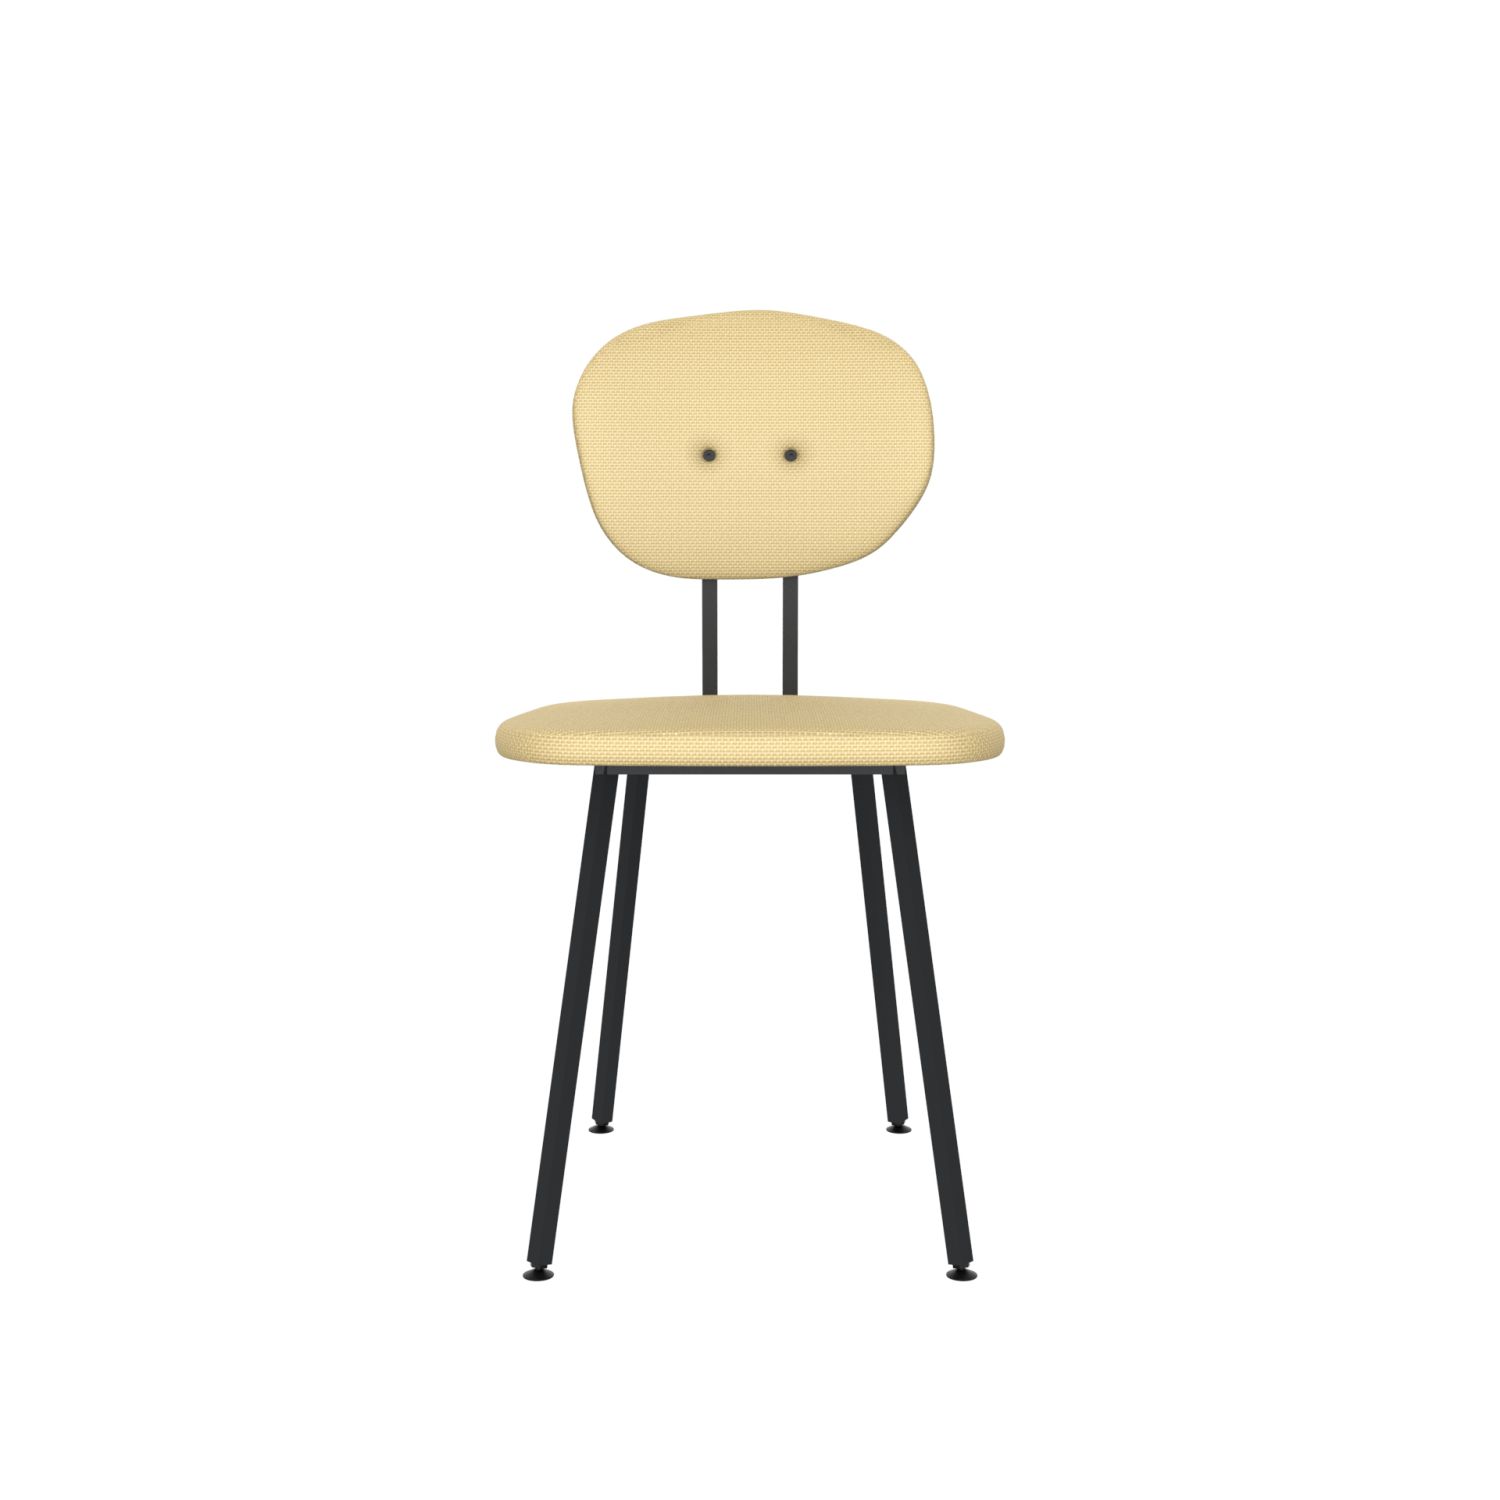 lensvelt maarten baas chair 101 not stackable without armrests backrest a light brown 141 black ral9005 hard leg ends